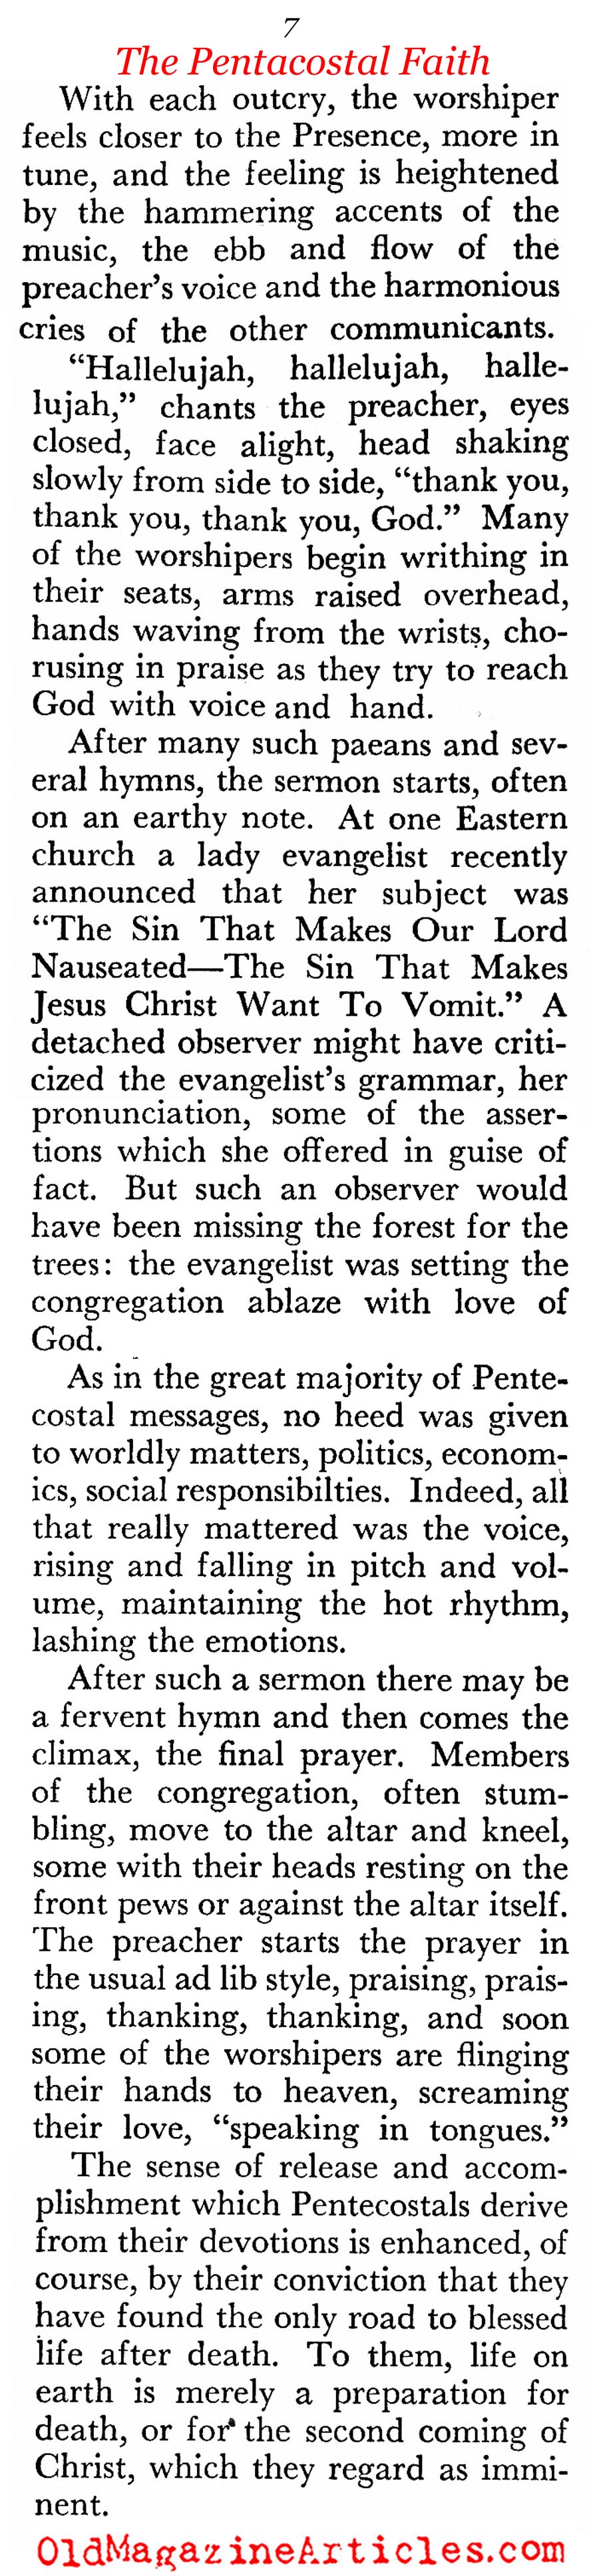 Assemblies of God (Coronet Magazine, 1958)